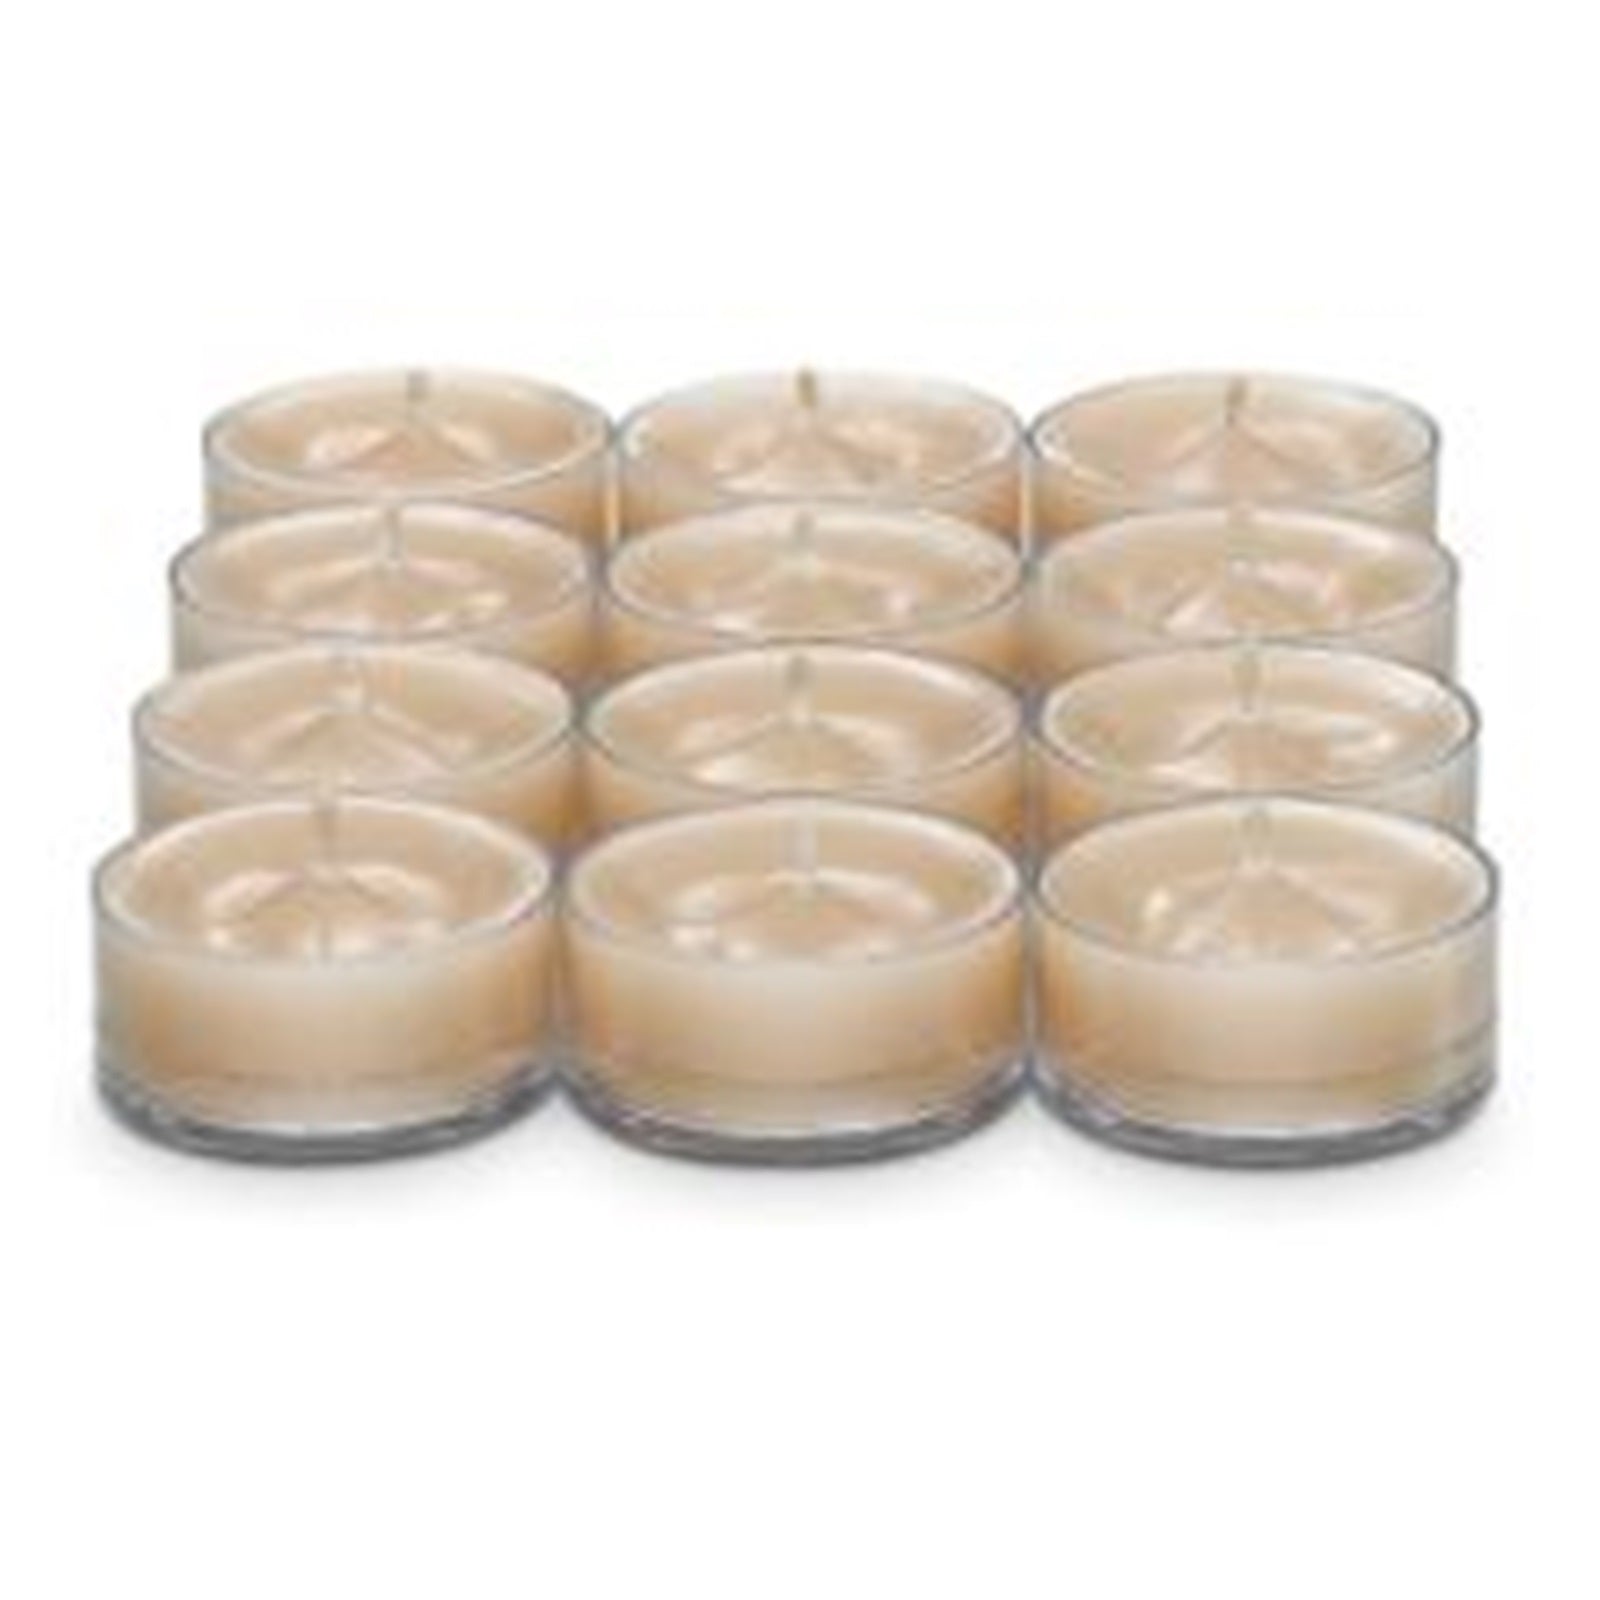 PartyLite Tealight Candles - 1 Box - 1 Dozen Tealights - 12 CANDLES WHITE OAK & SANDAL WOOD